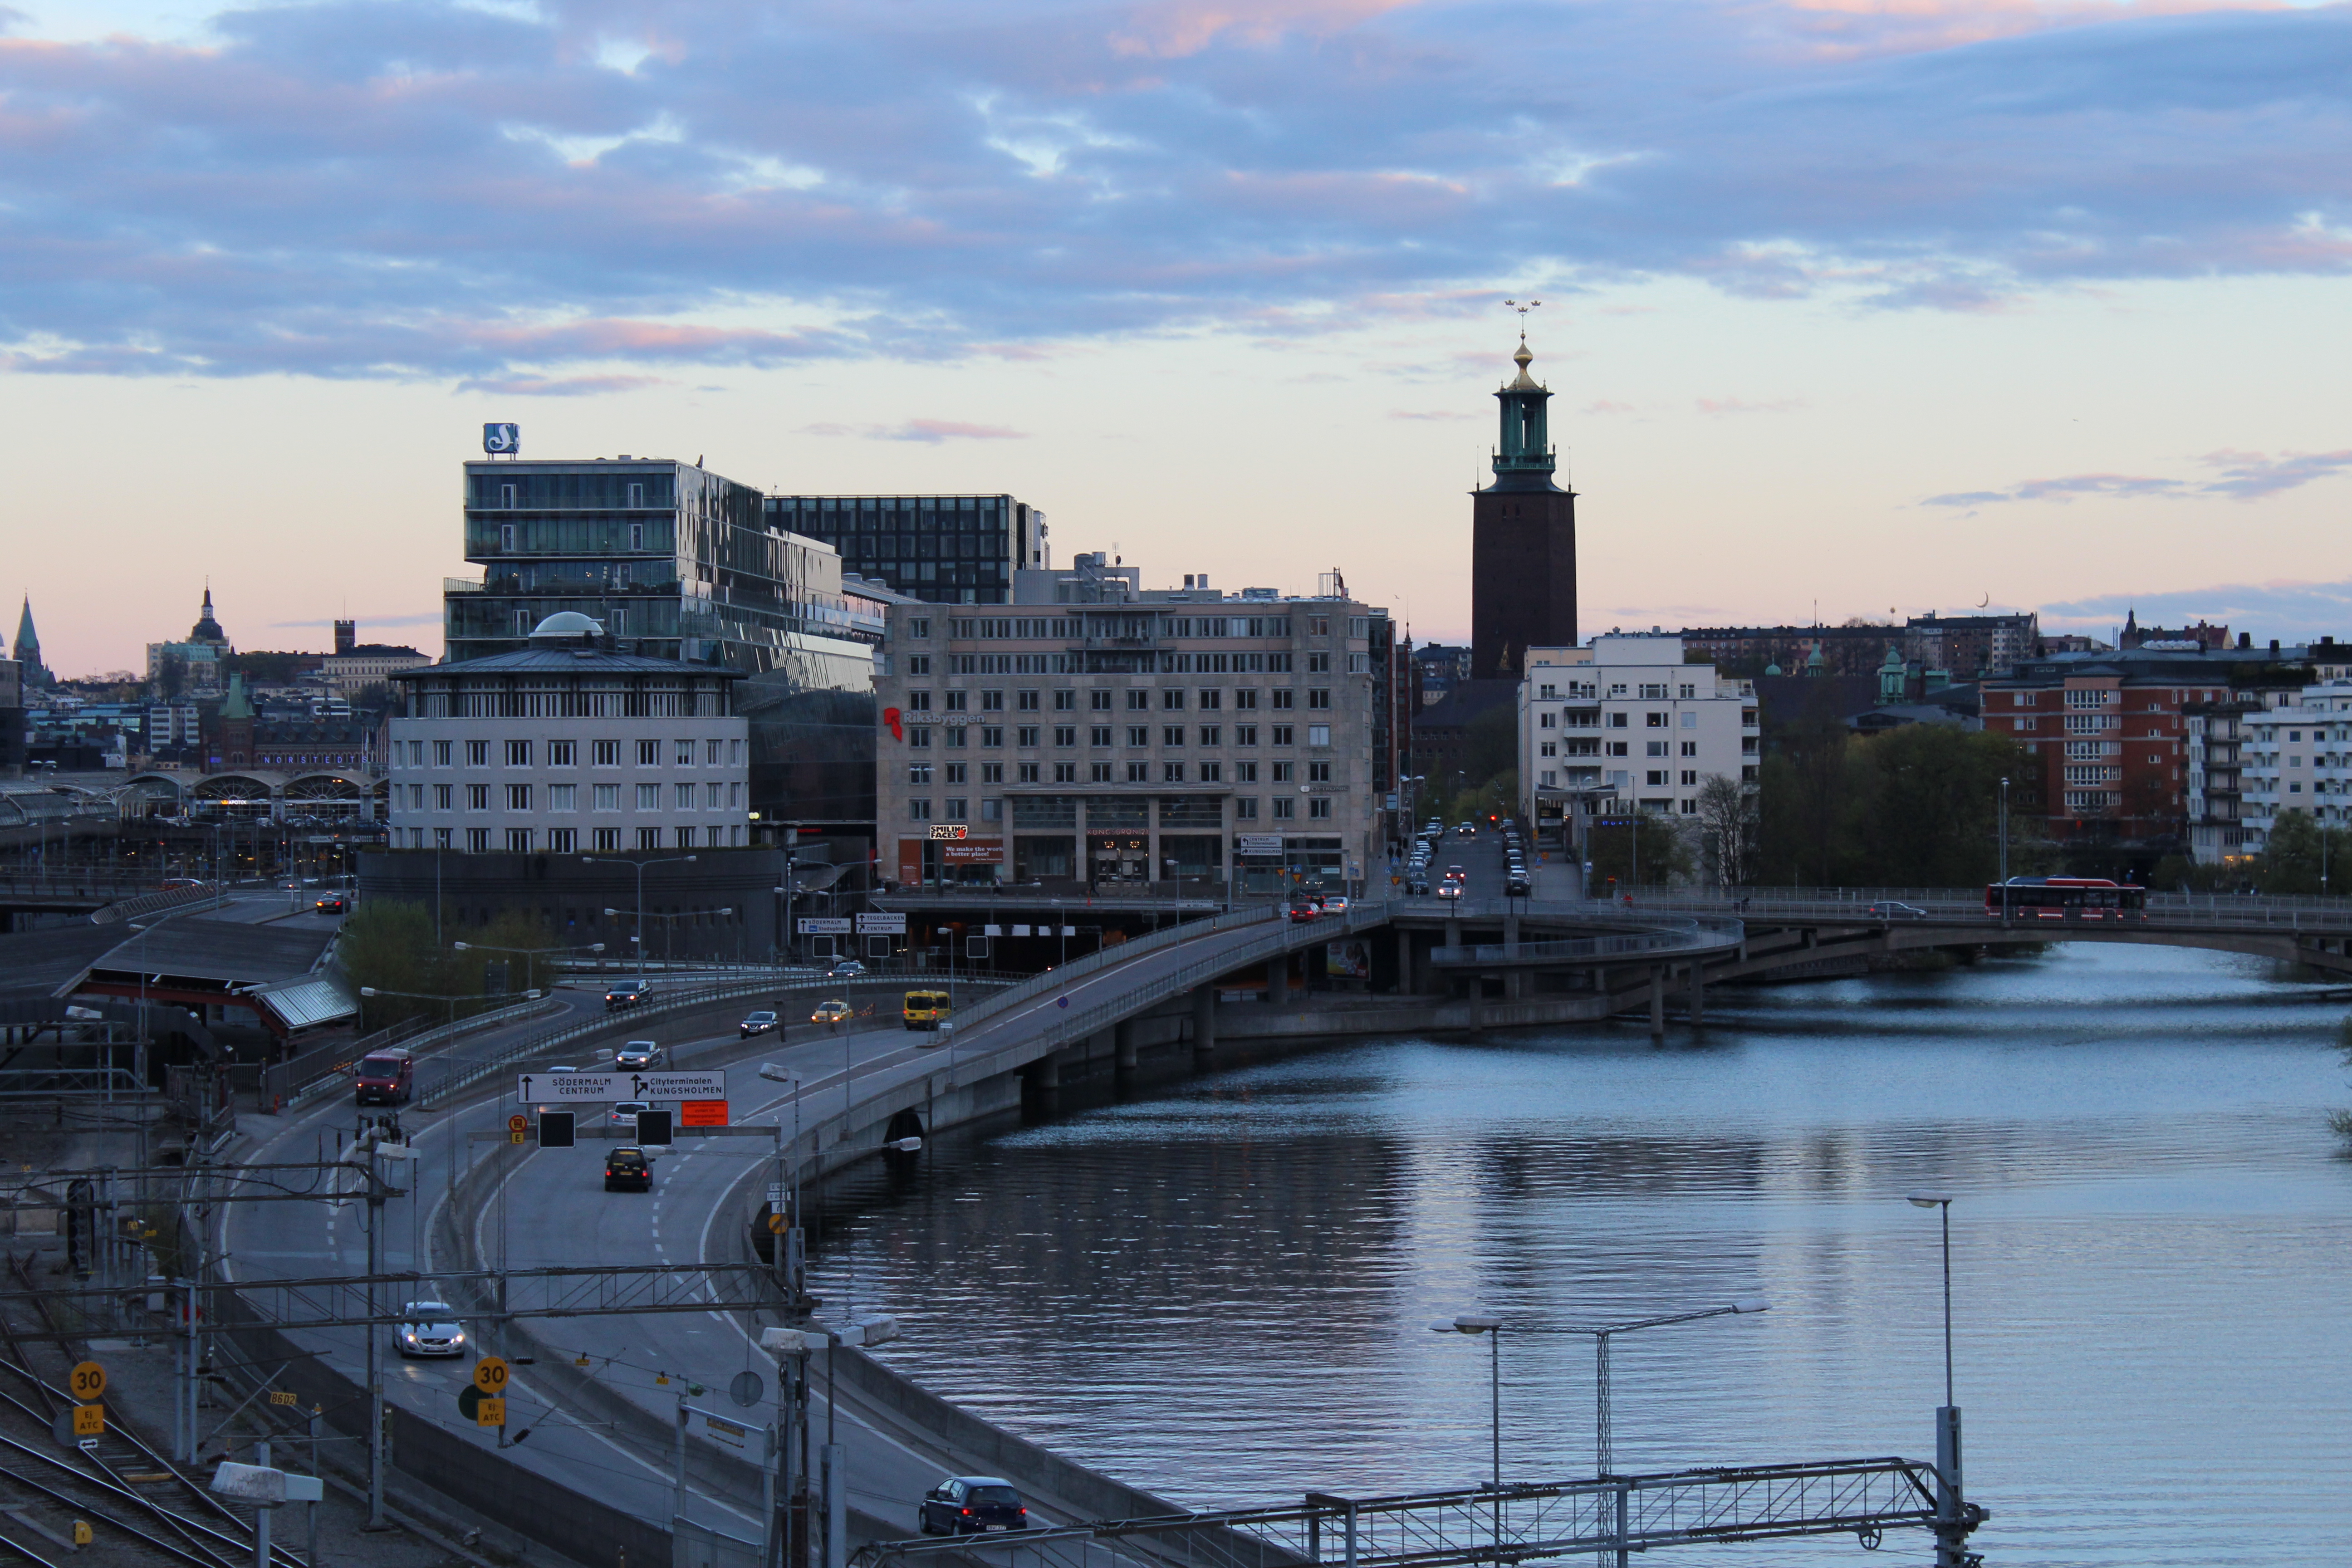 Stockholm Picture by Kazeiru